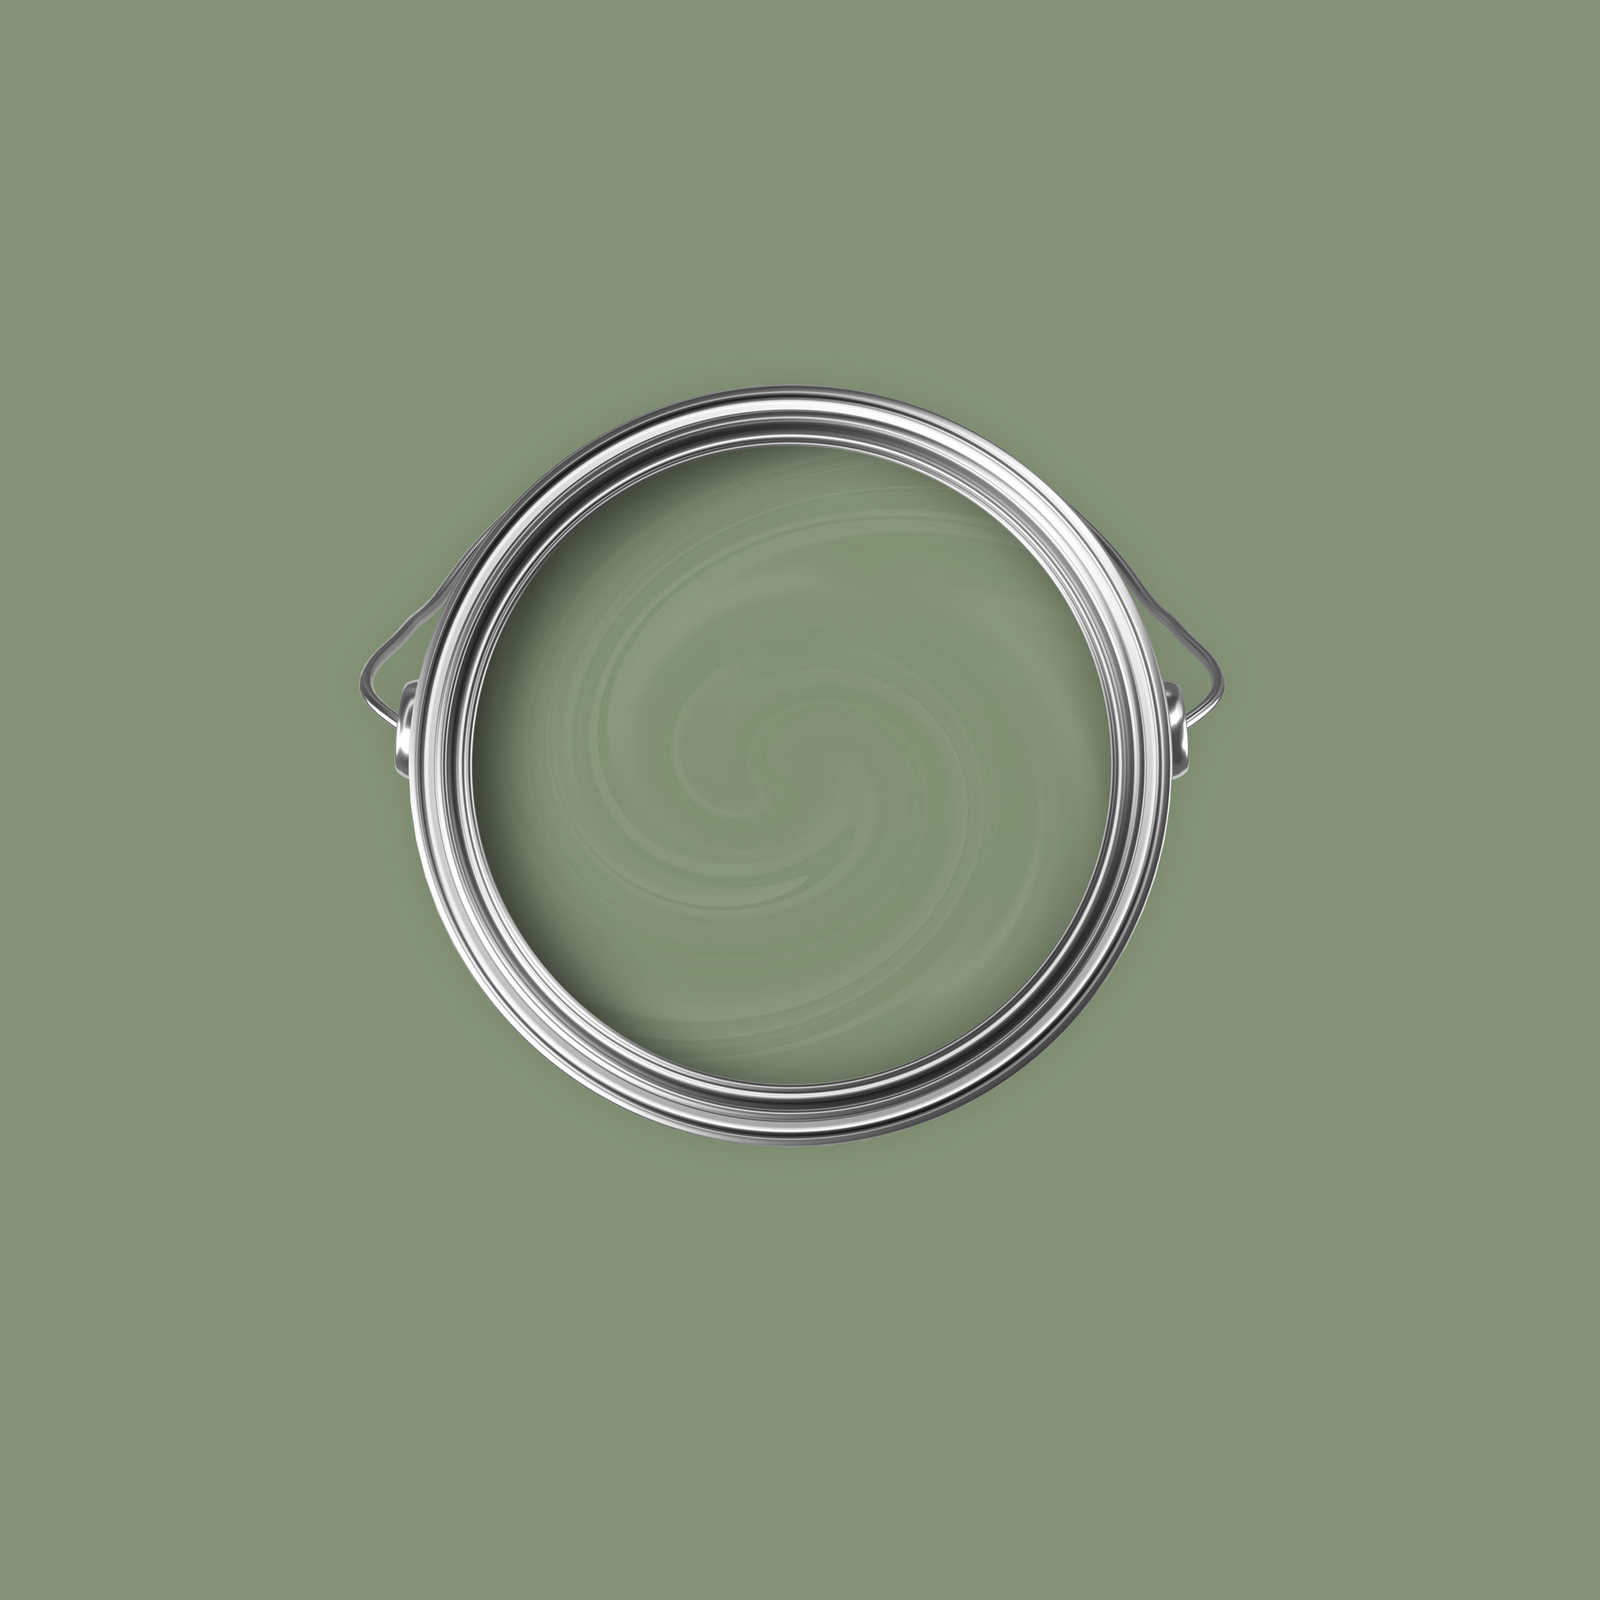             Peinture murale Premium vert olive naturel »Gorgeous Green« NW503 – 2,5 litres
        